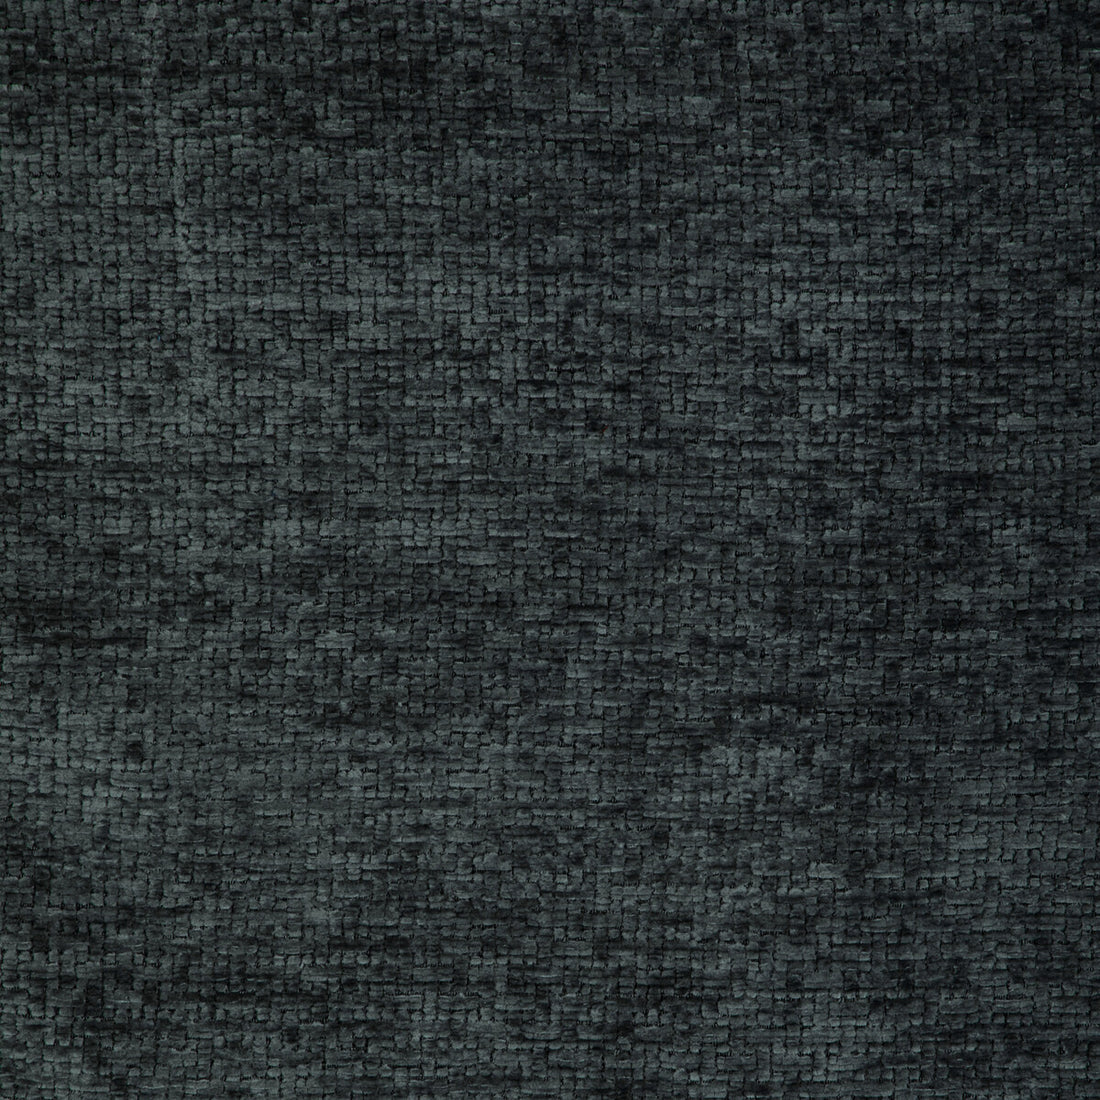 Kravet Smart fabric in 36993-21 color - pattern 36993.21.0 - by Kravet Smart in the Performance Kravetarmor collection